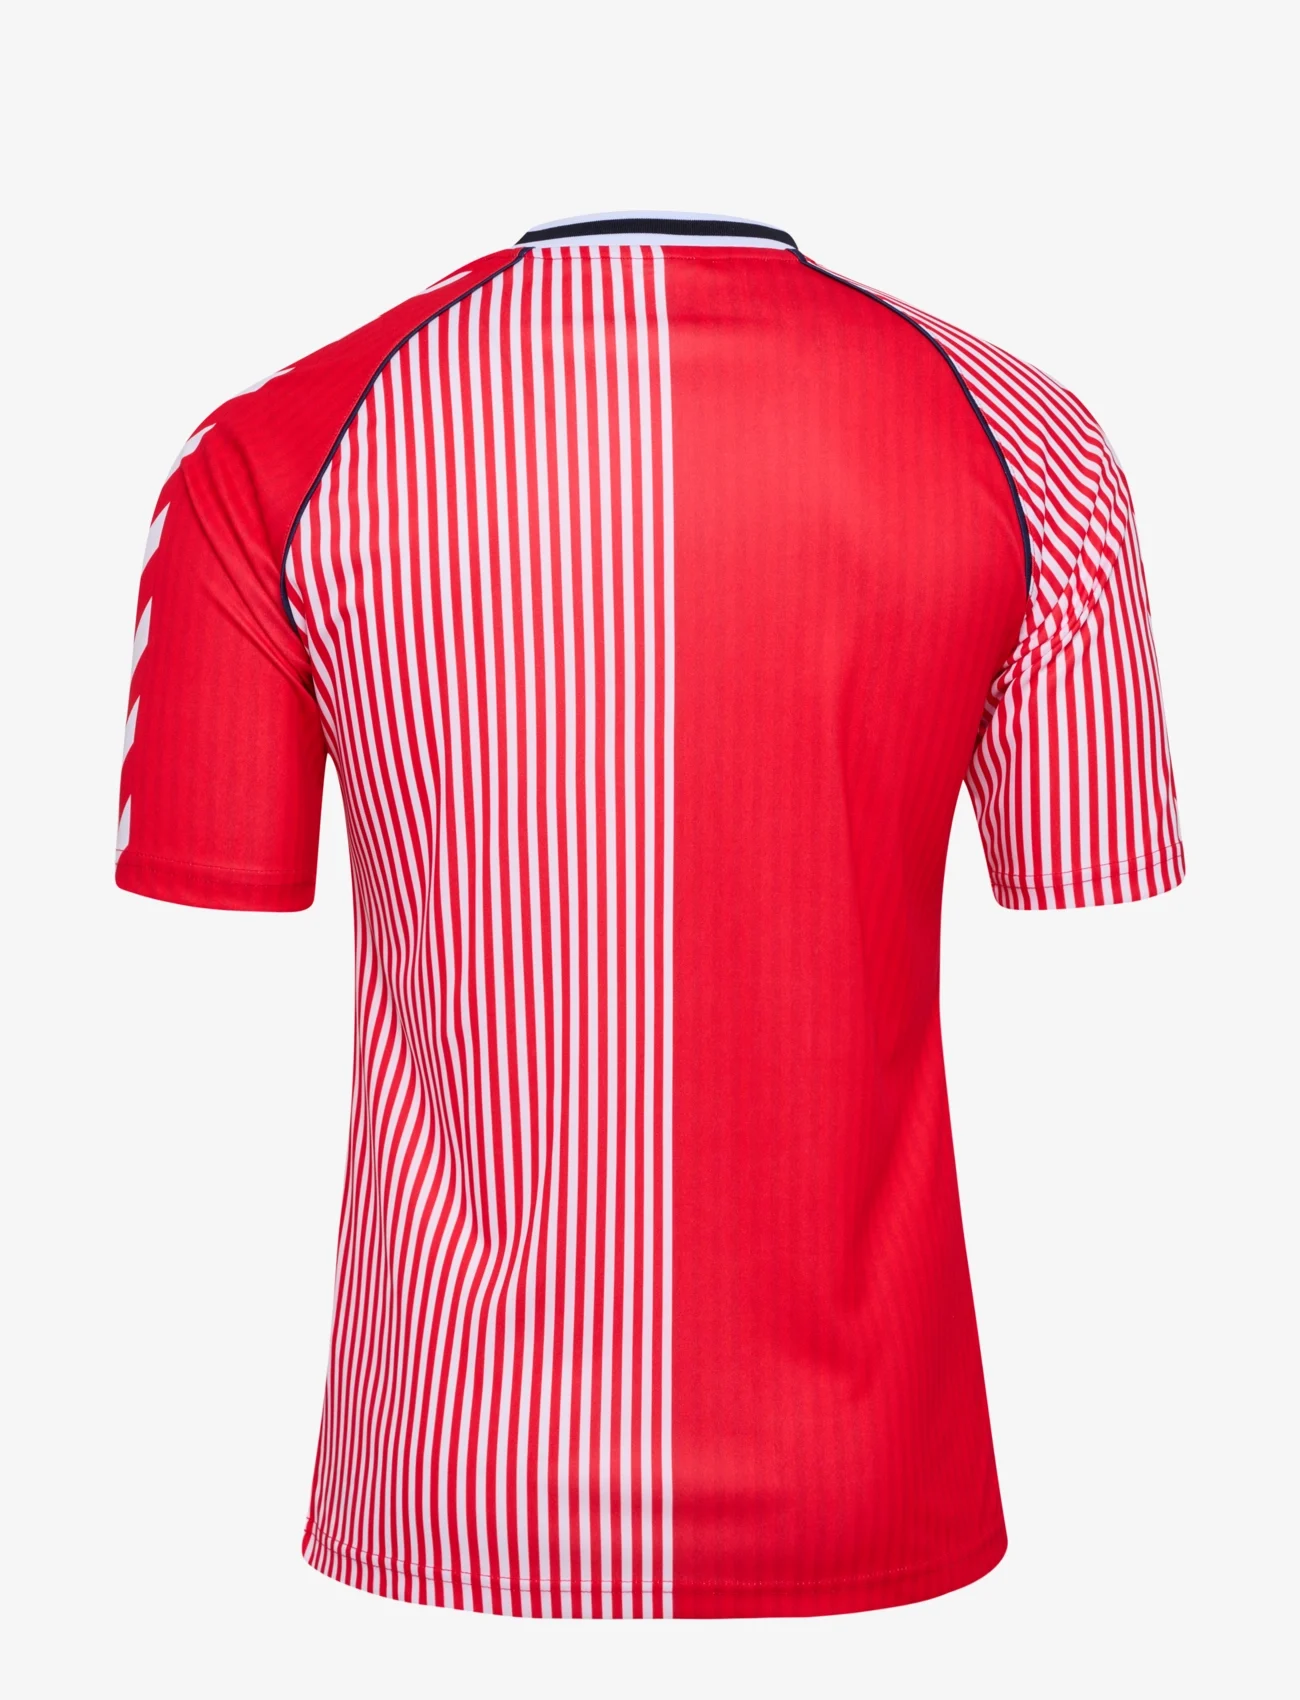 Hummel - DBU 86 REPLICA JERSEY S/S - futbolo marškinėliai - red/white - 1